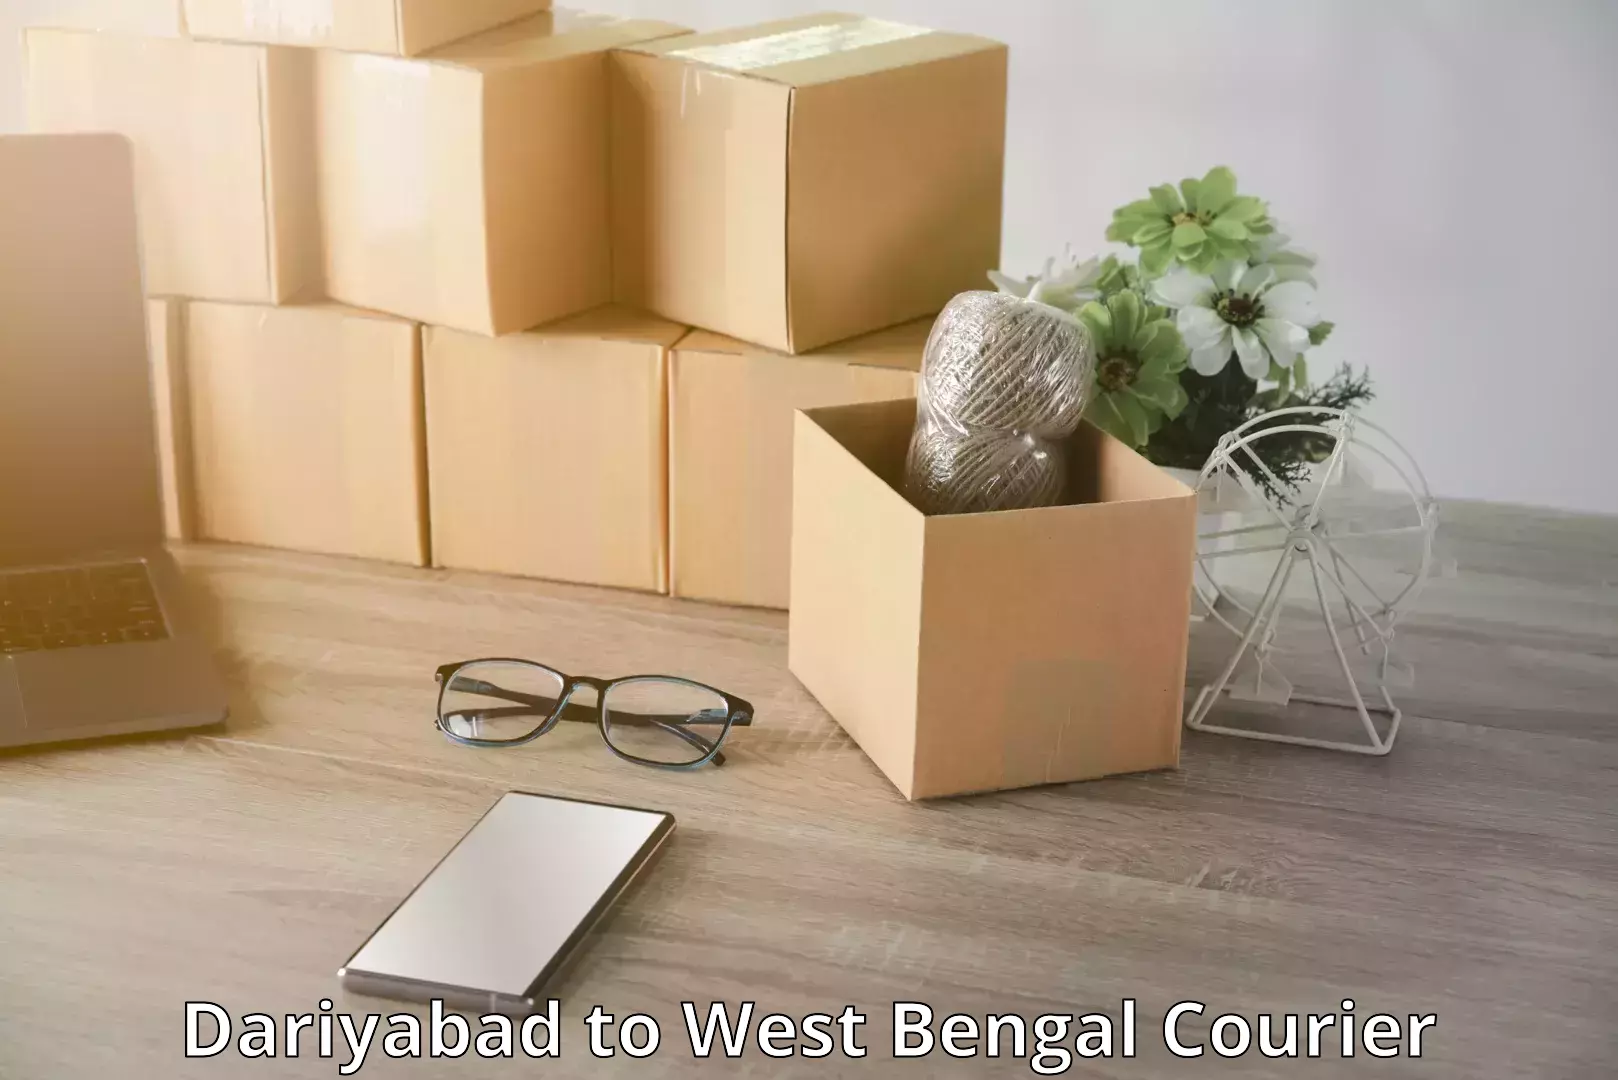 Doorstep luggage collection Dariyabad to West Bengal